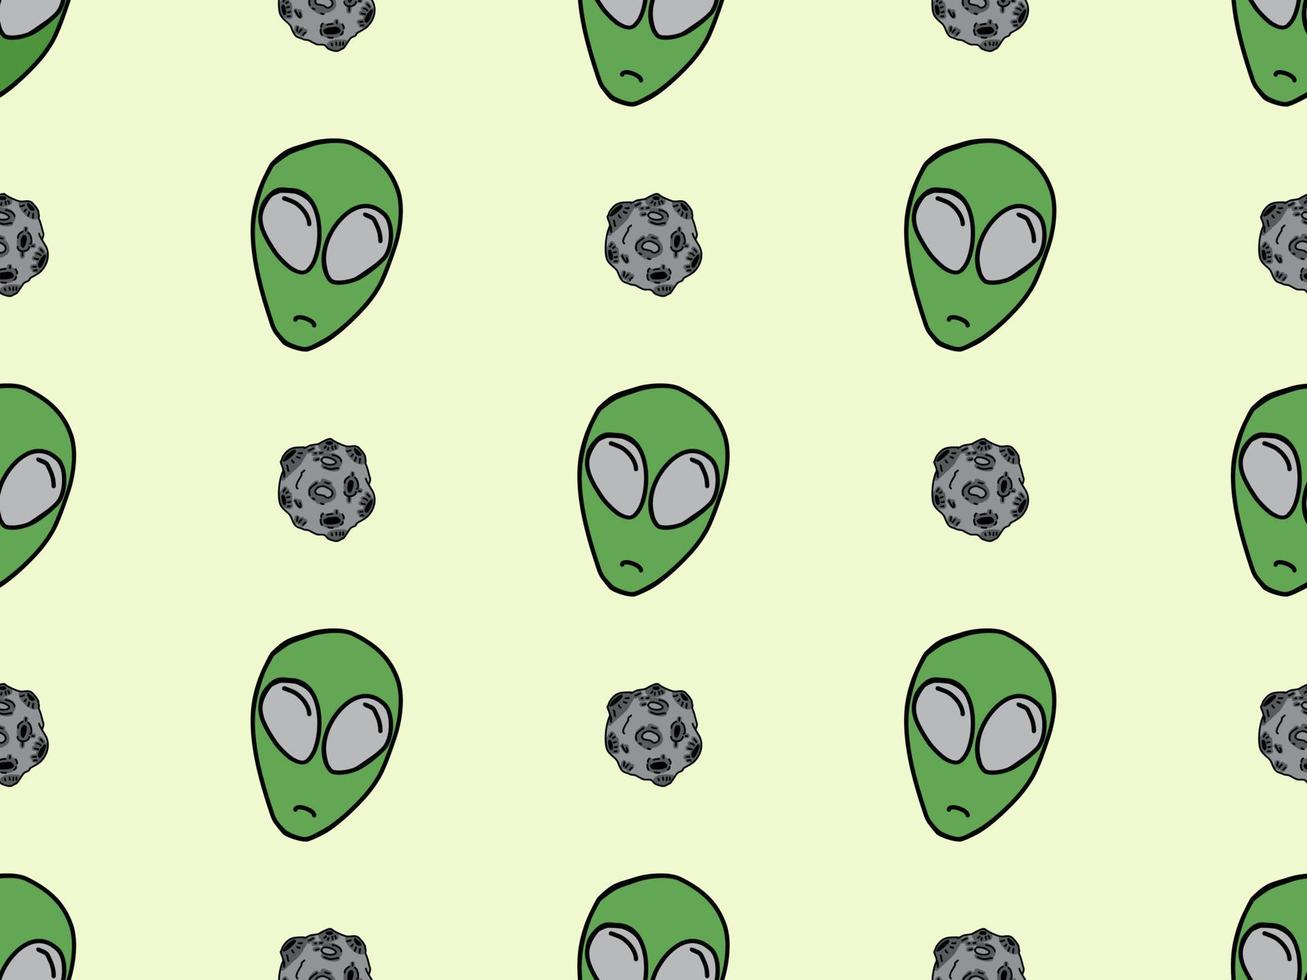 Alien cartoon character seamless pattern on green background vector